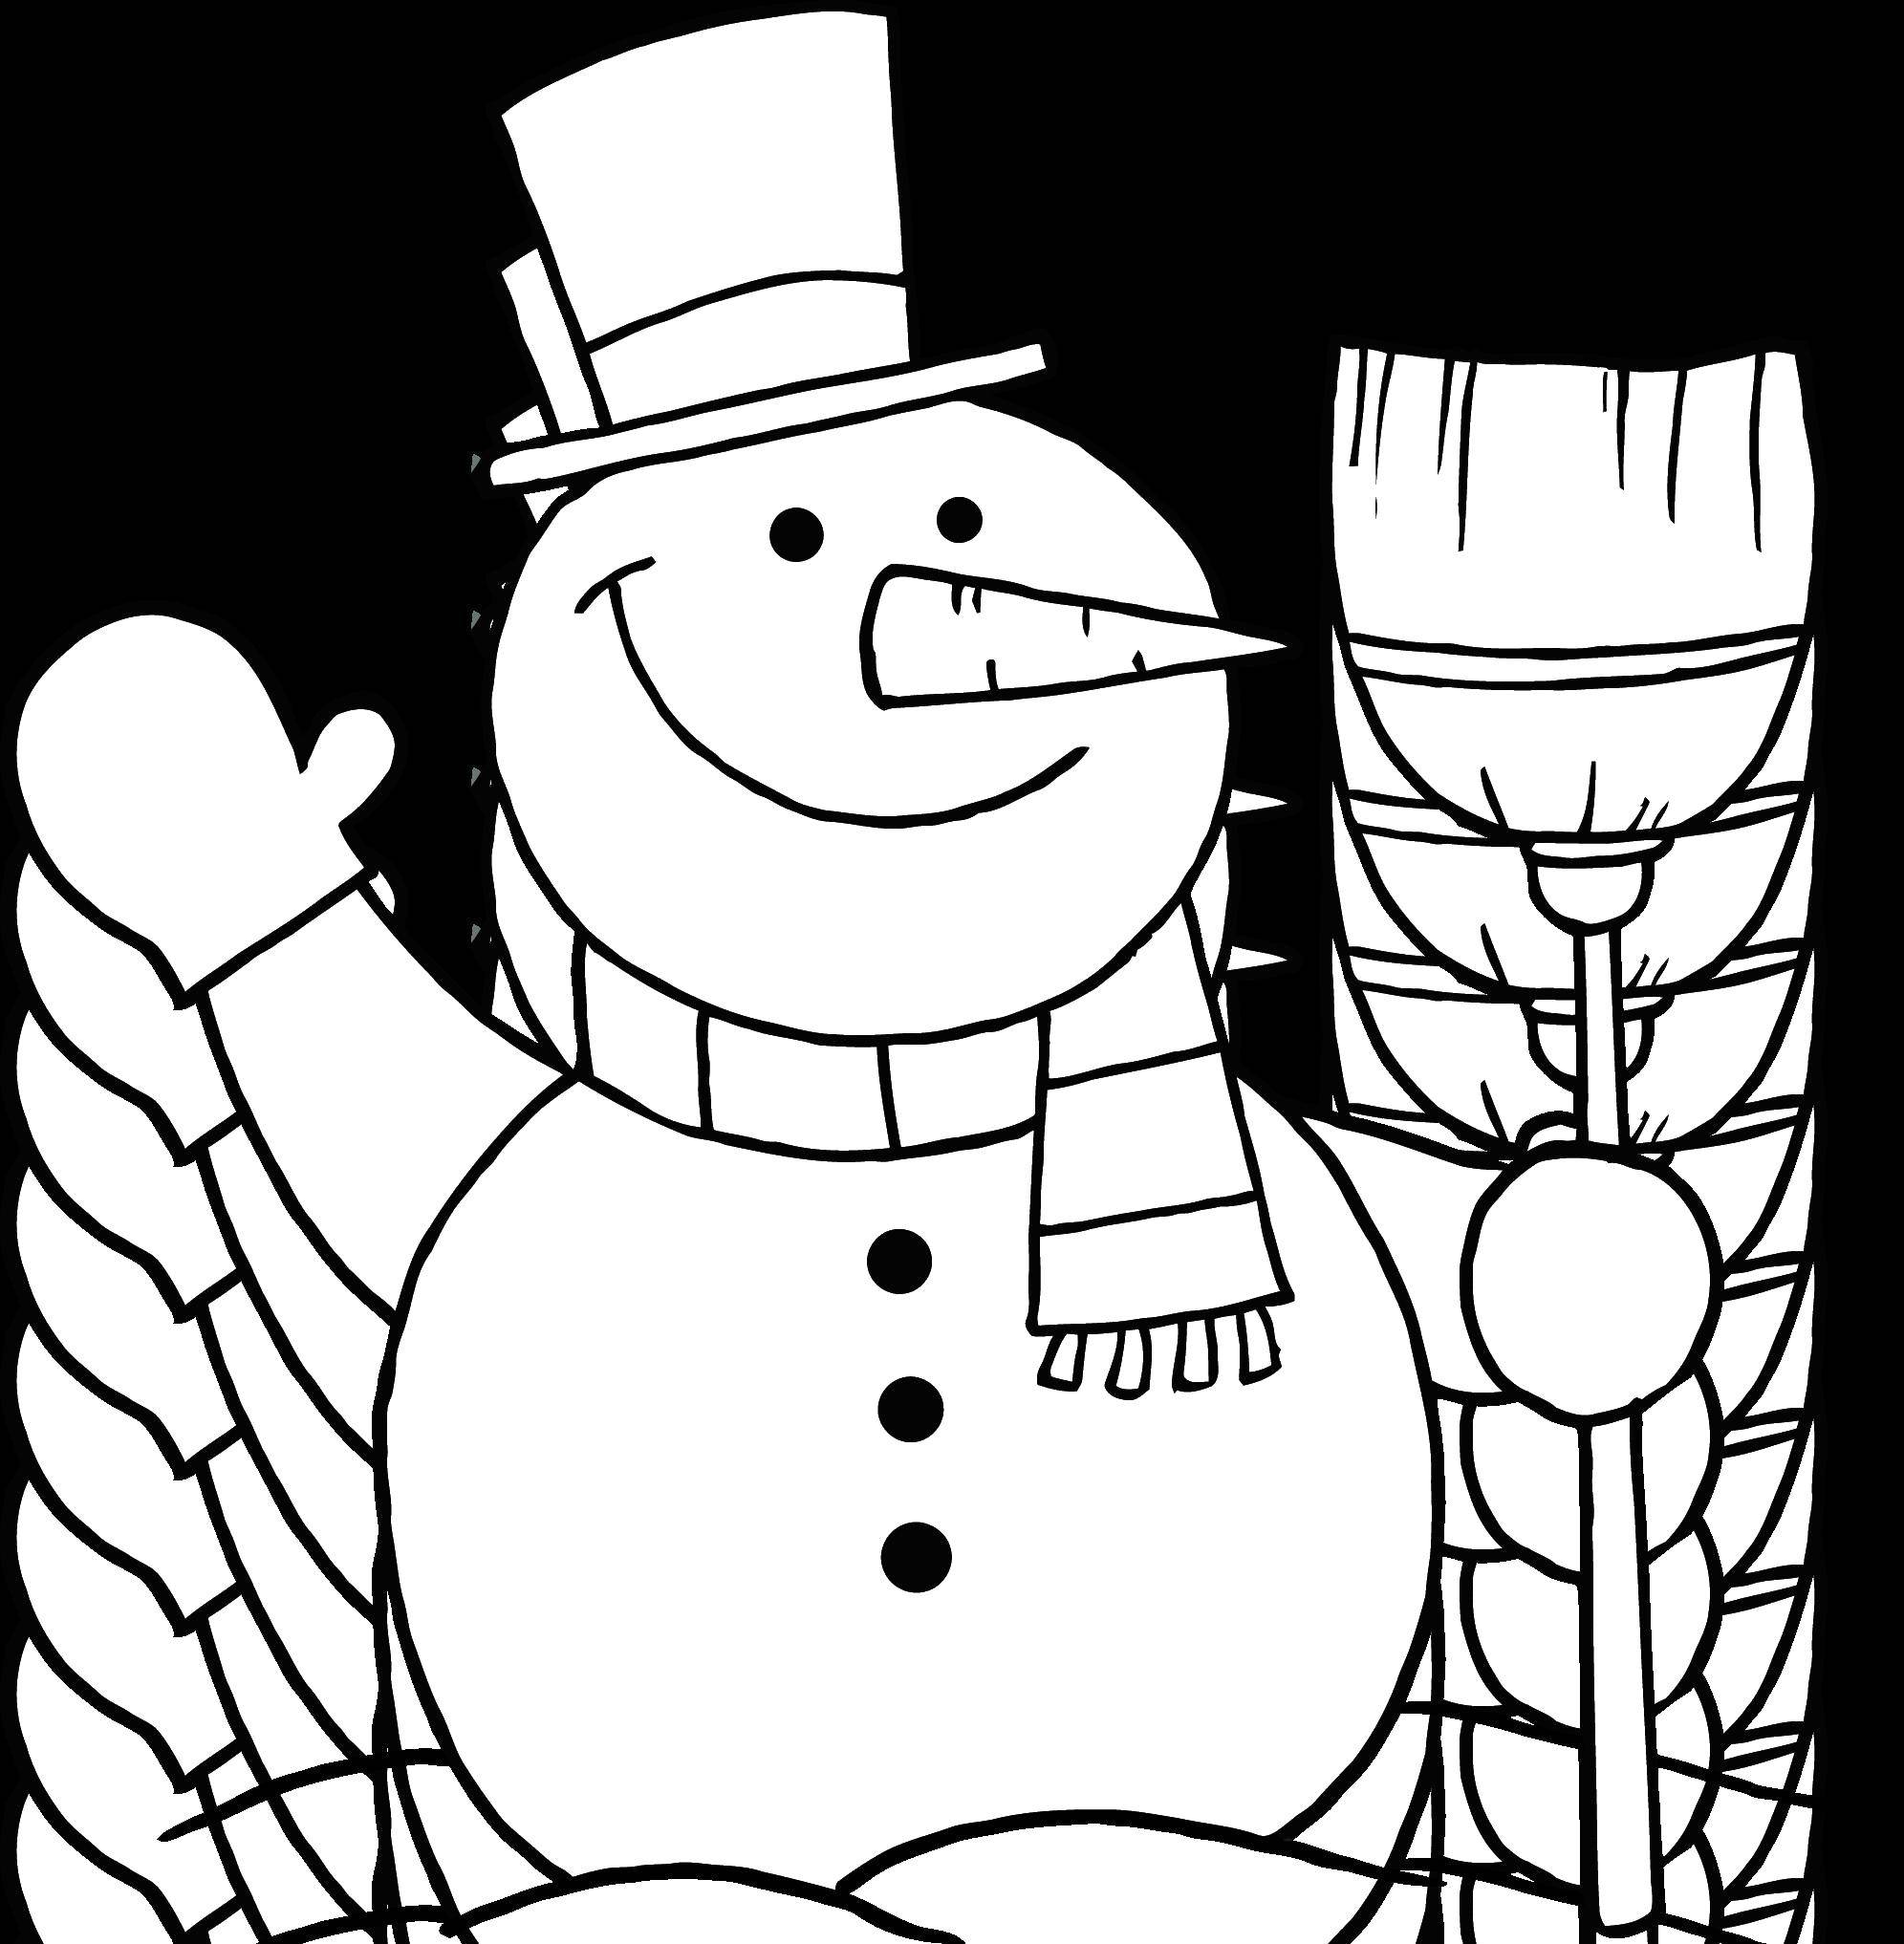 Coloring Snowman. Category snowman. Tags:  snowman, winter, snow.